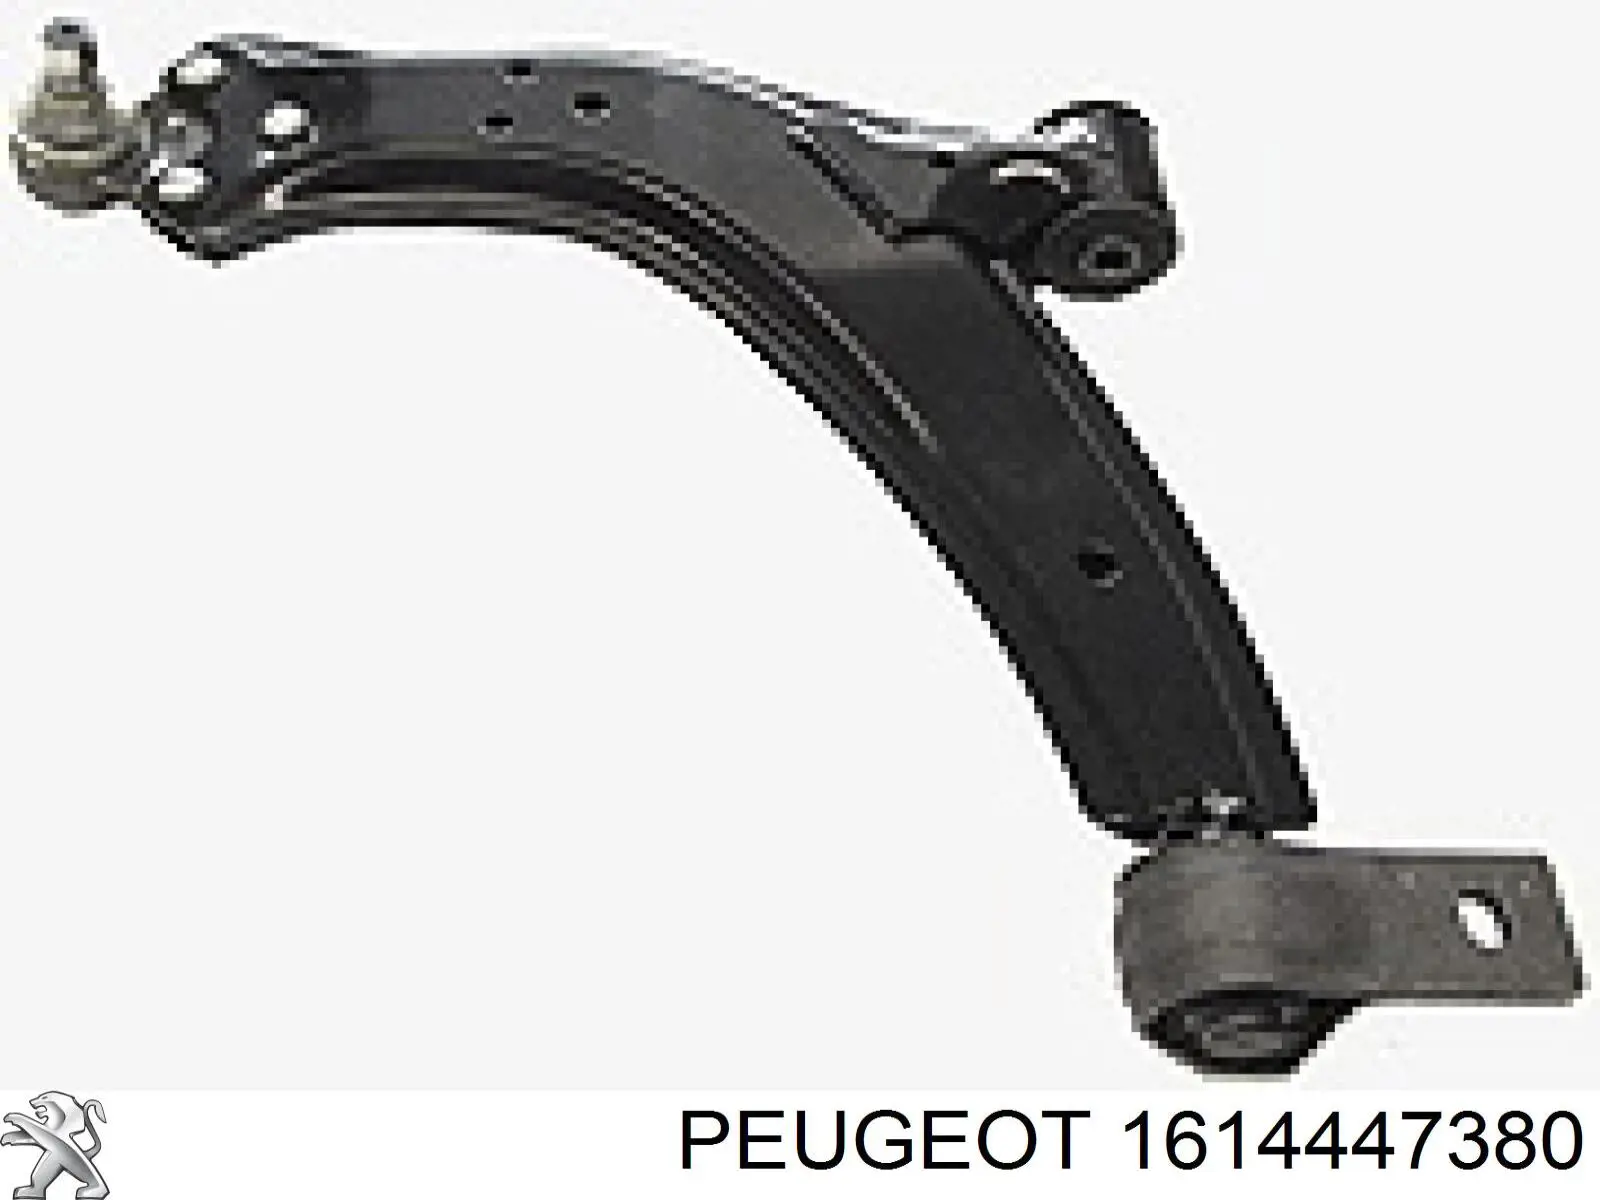 1614447380 Peugeot/Citroen